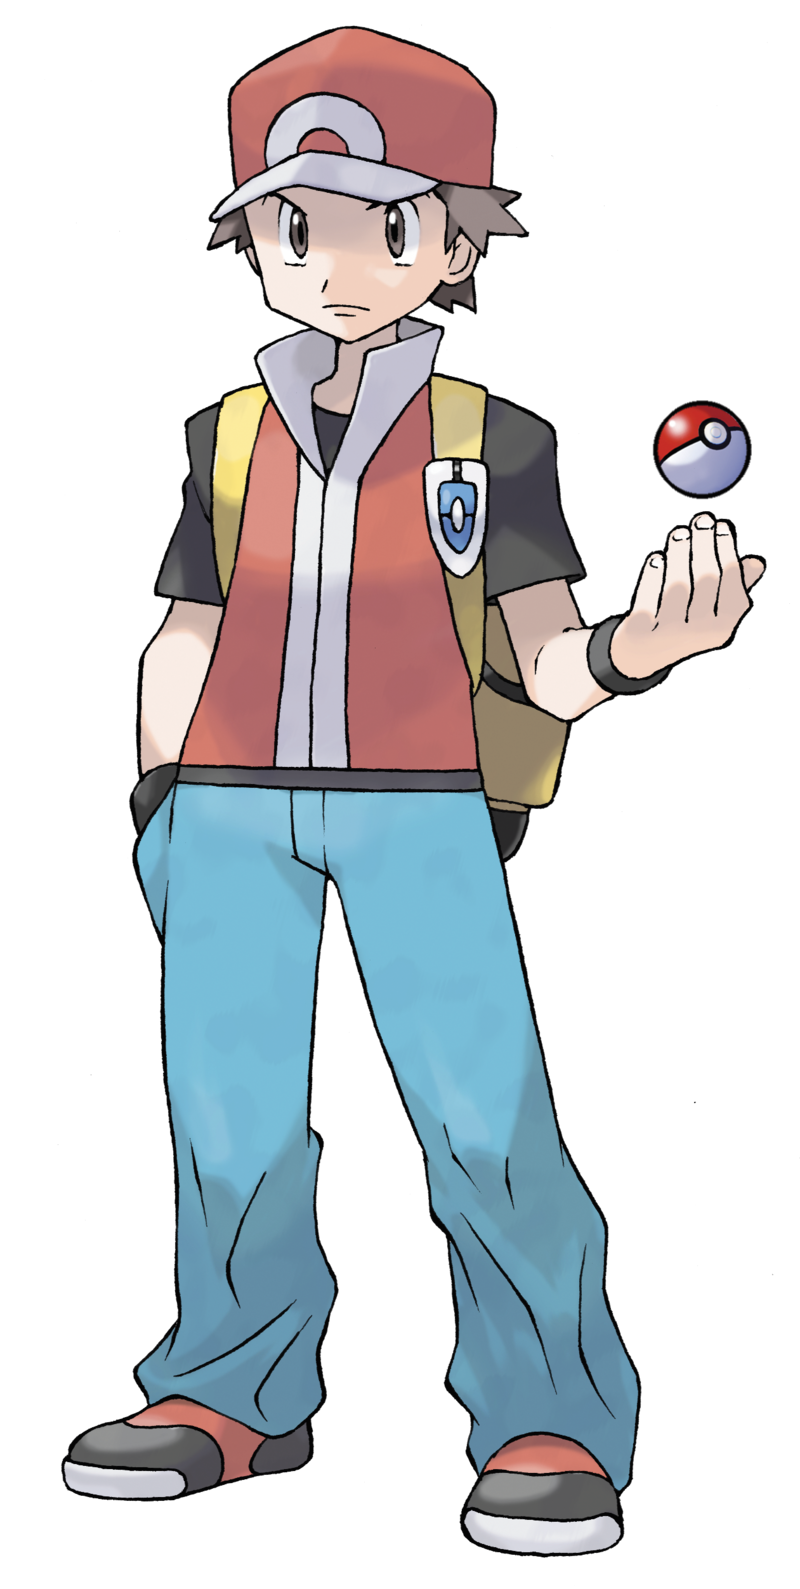 Pokémon Trainer - SmashWiki, the Super Smash Bros. wiki